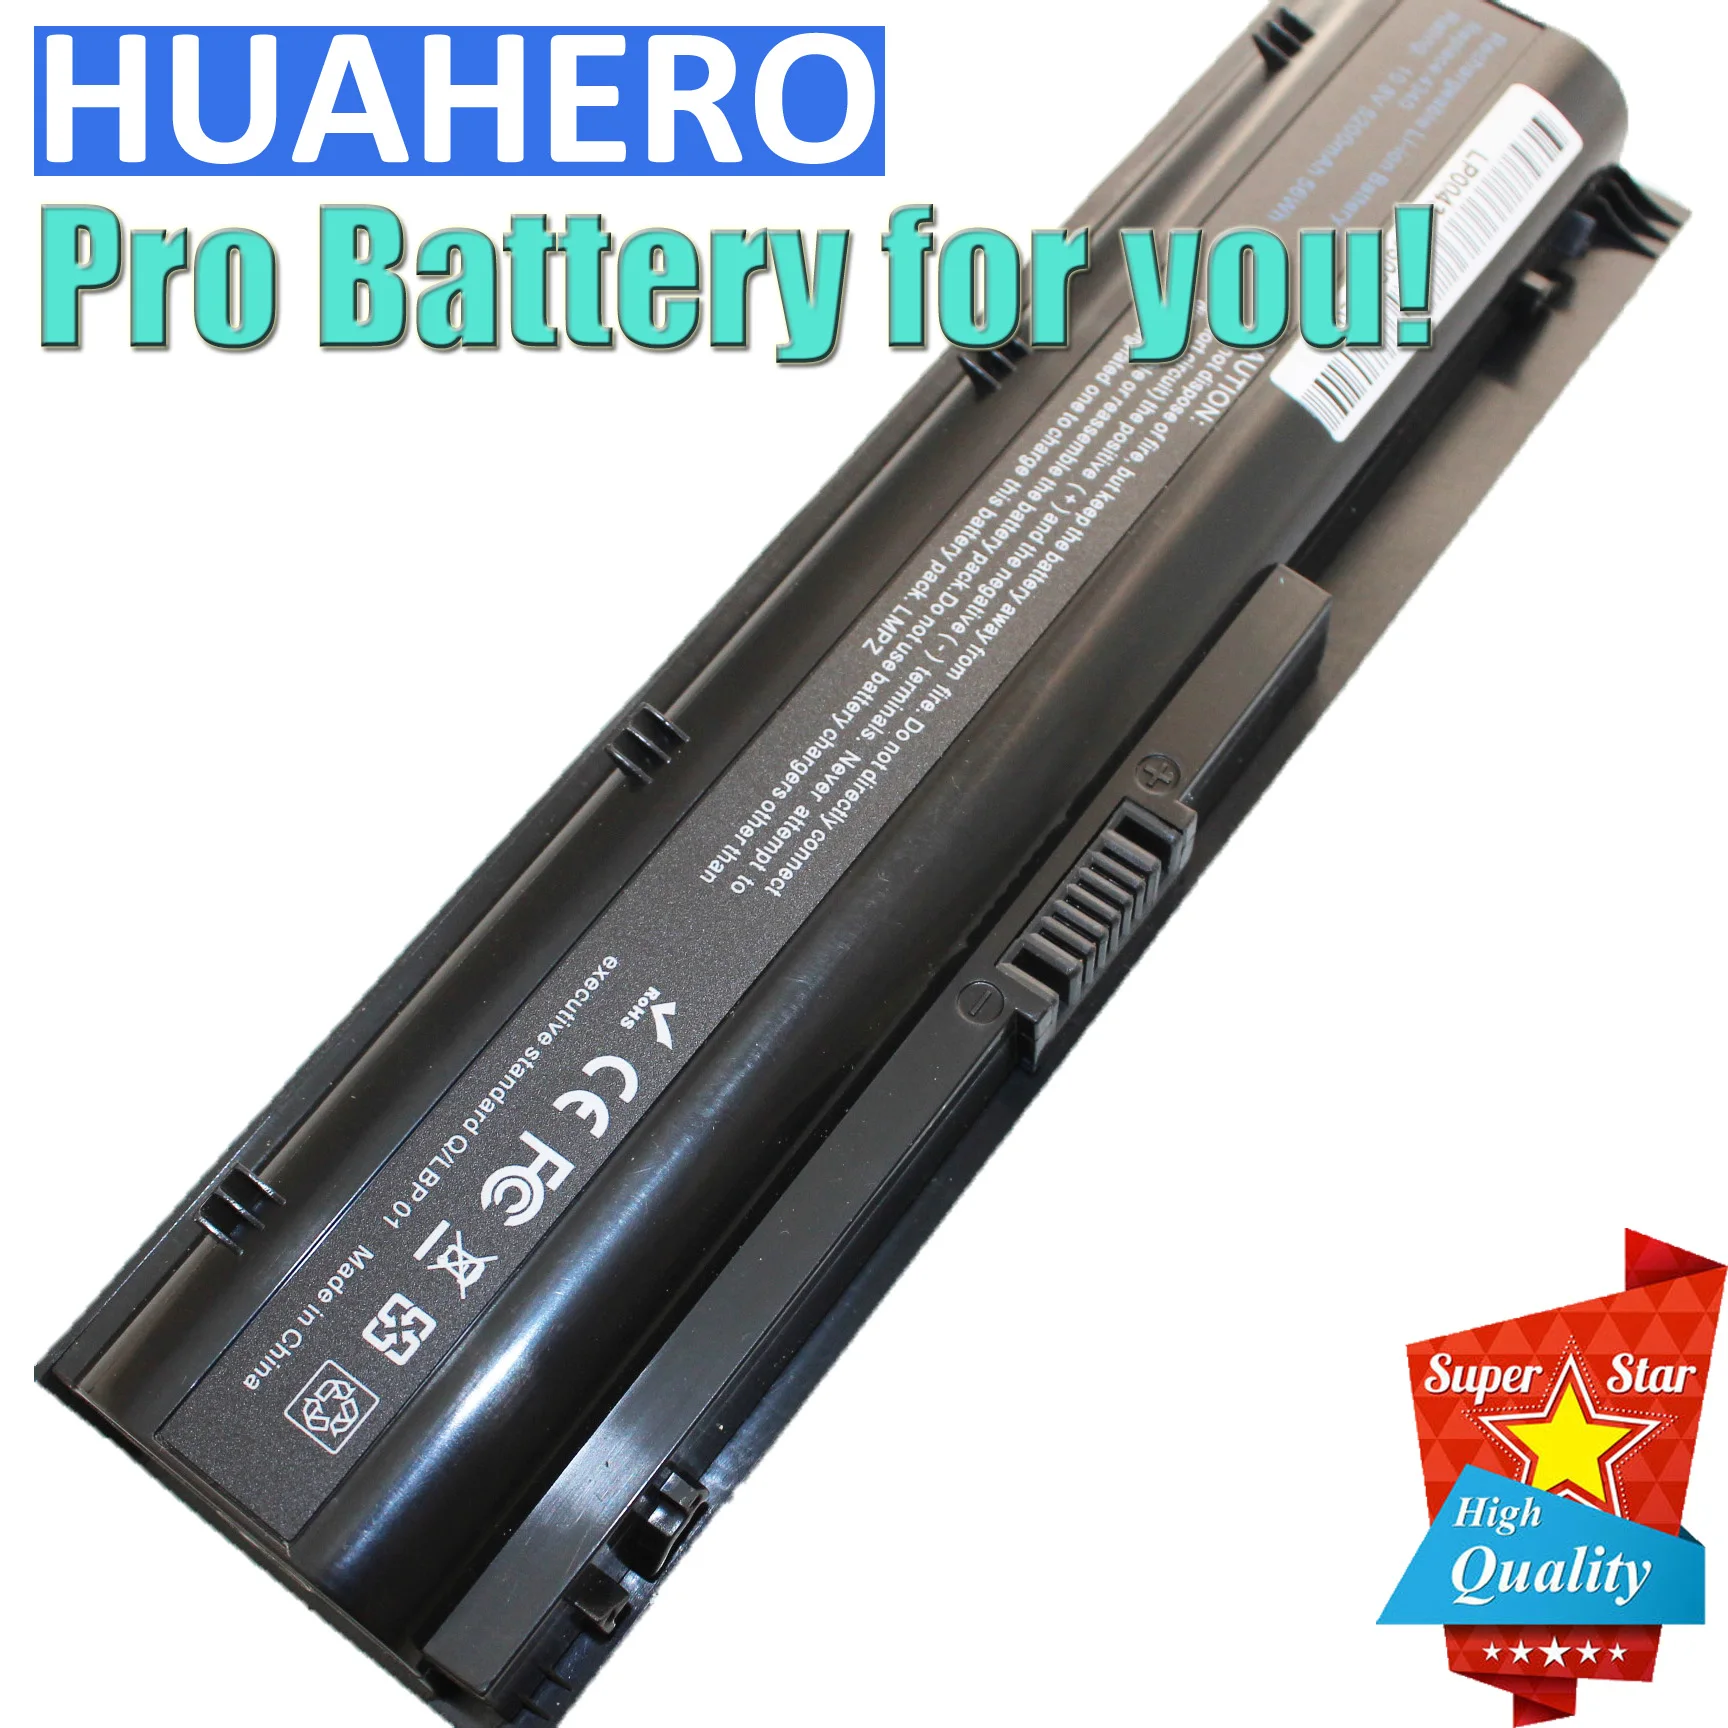 HUAHERO Baterija za HP ProBook 4340s ProBook 4341s RC06 RC06XL 668811-541 668811-851 669831-001 HSTNN-UB3K HSTNN-W84C HSTNN-YB3k